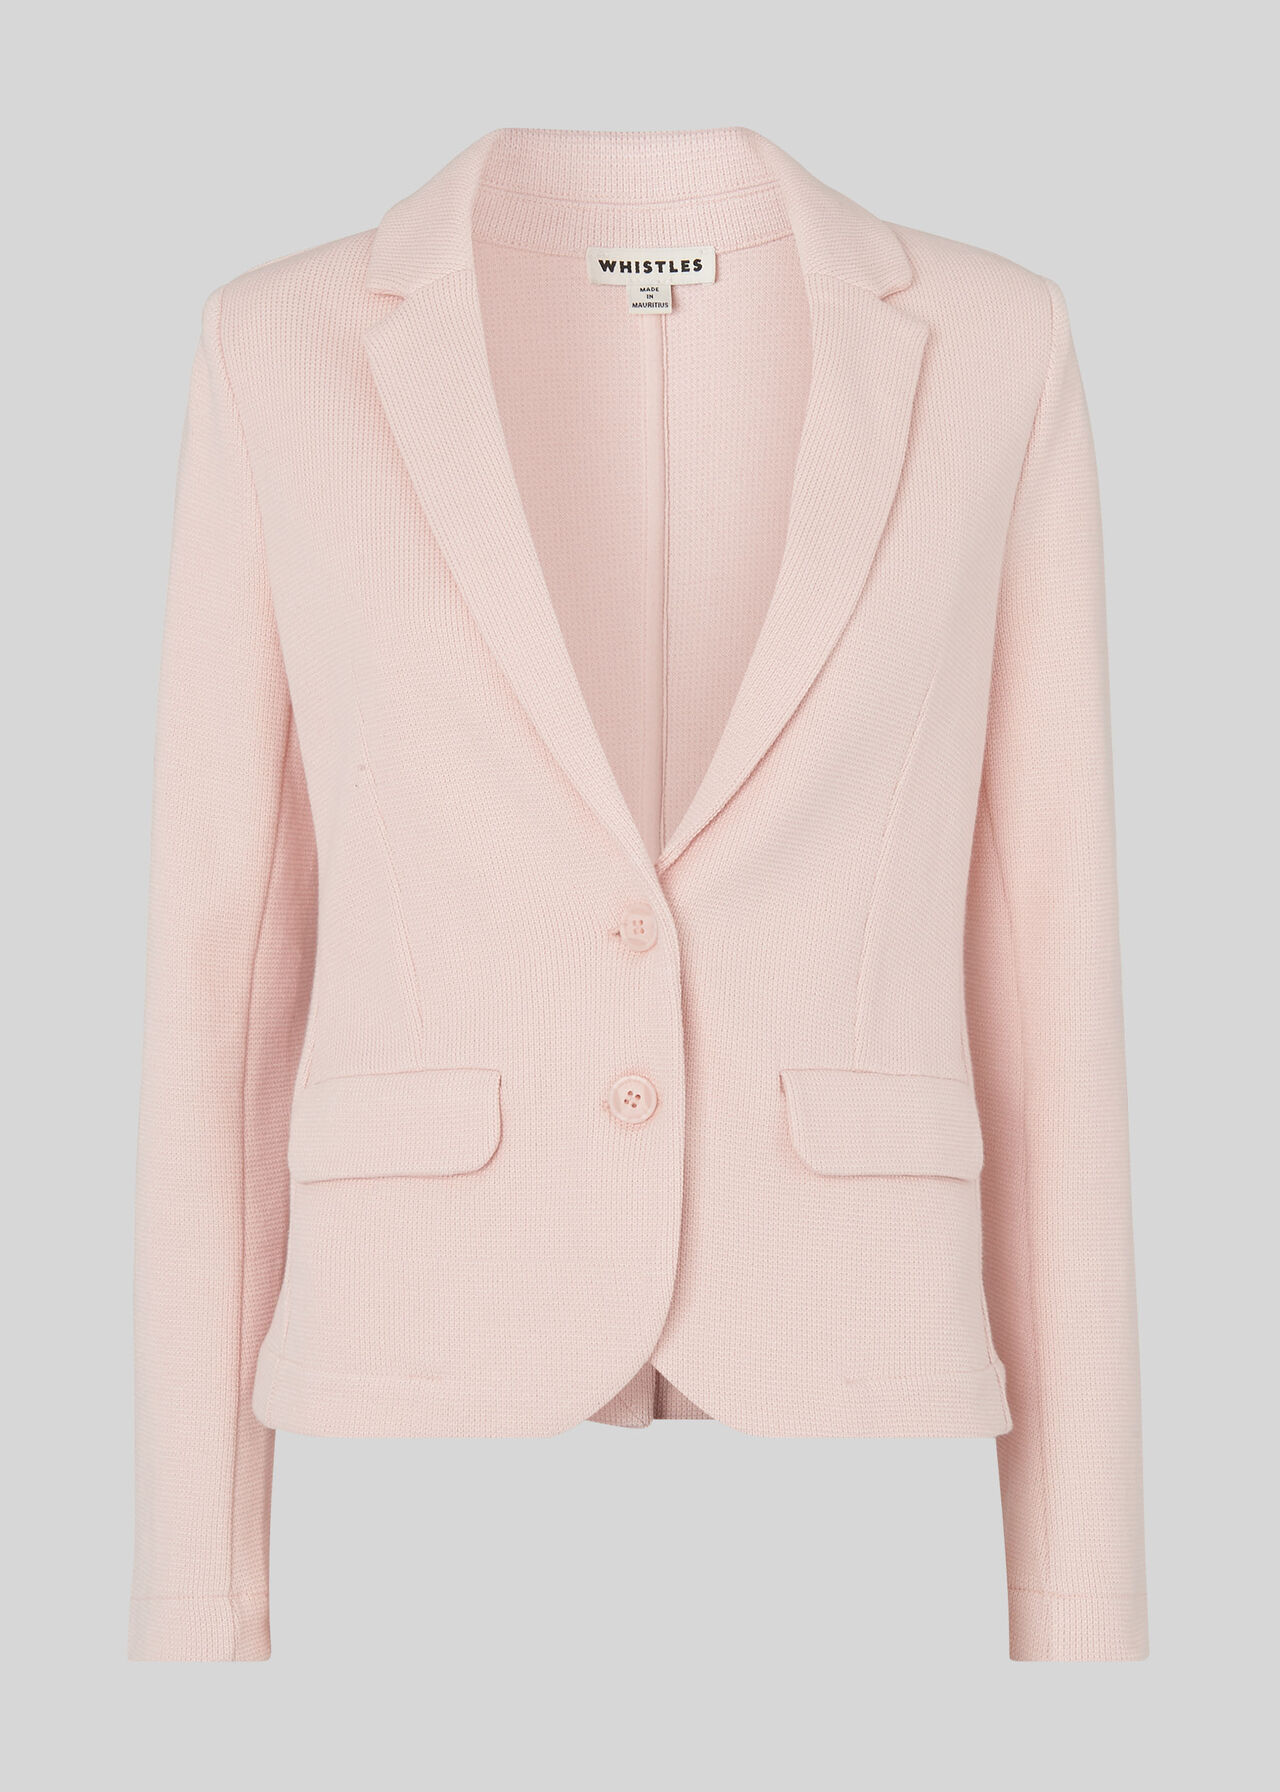 Pale Pink Jersey Jacket | WHISTLES